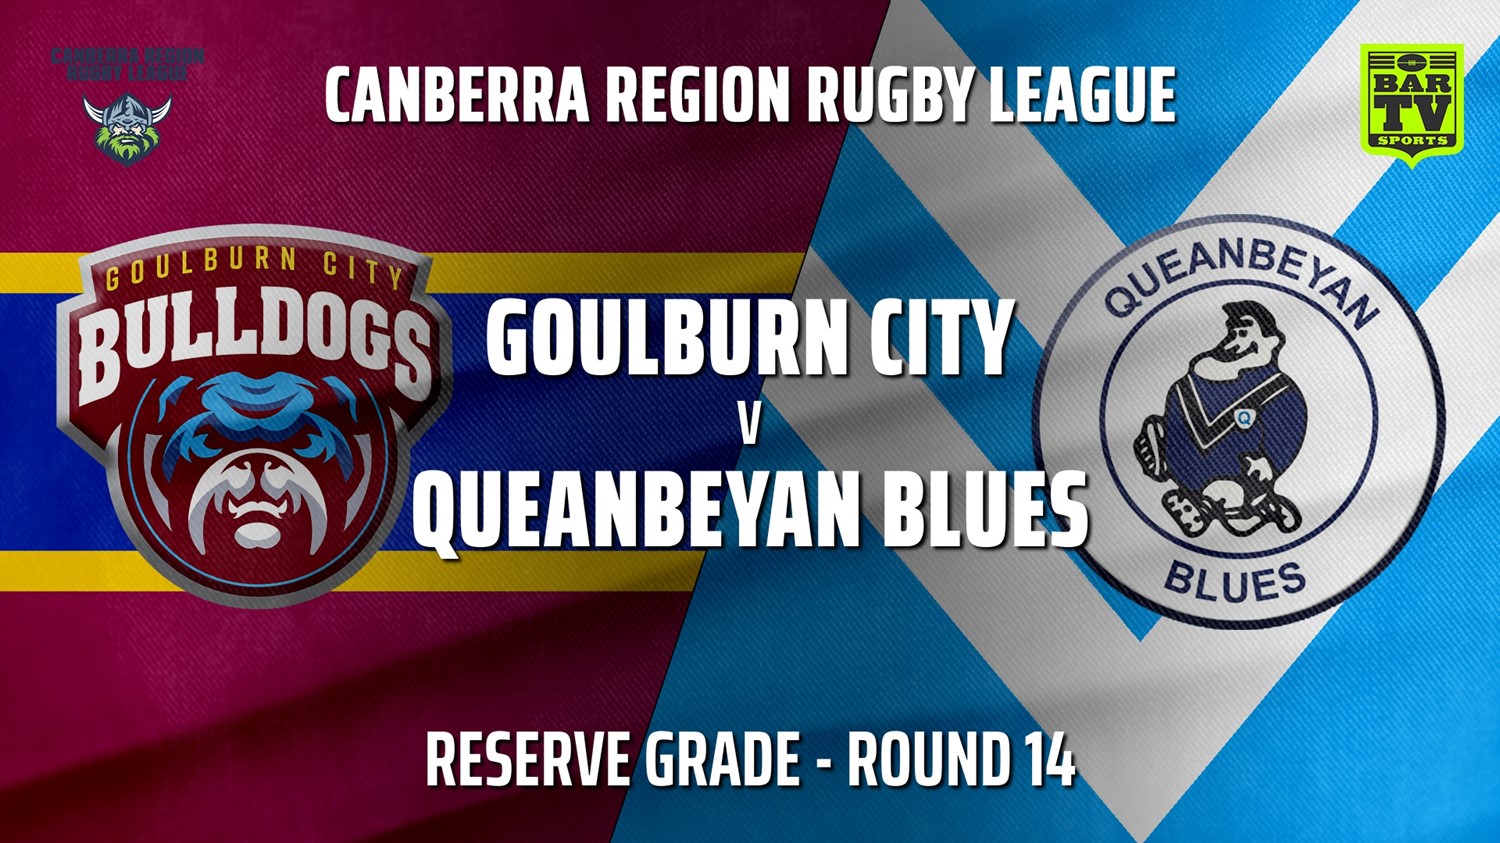 210801-Canberra Round 14 - Reserve Grade - Goulburn City Bulldogs v Queanbeyan Blues Slate Image